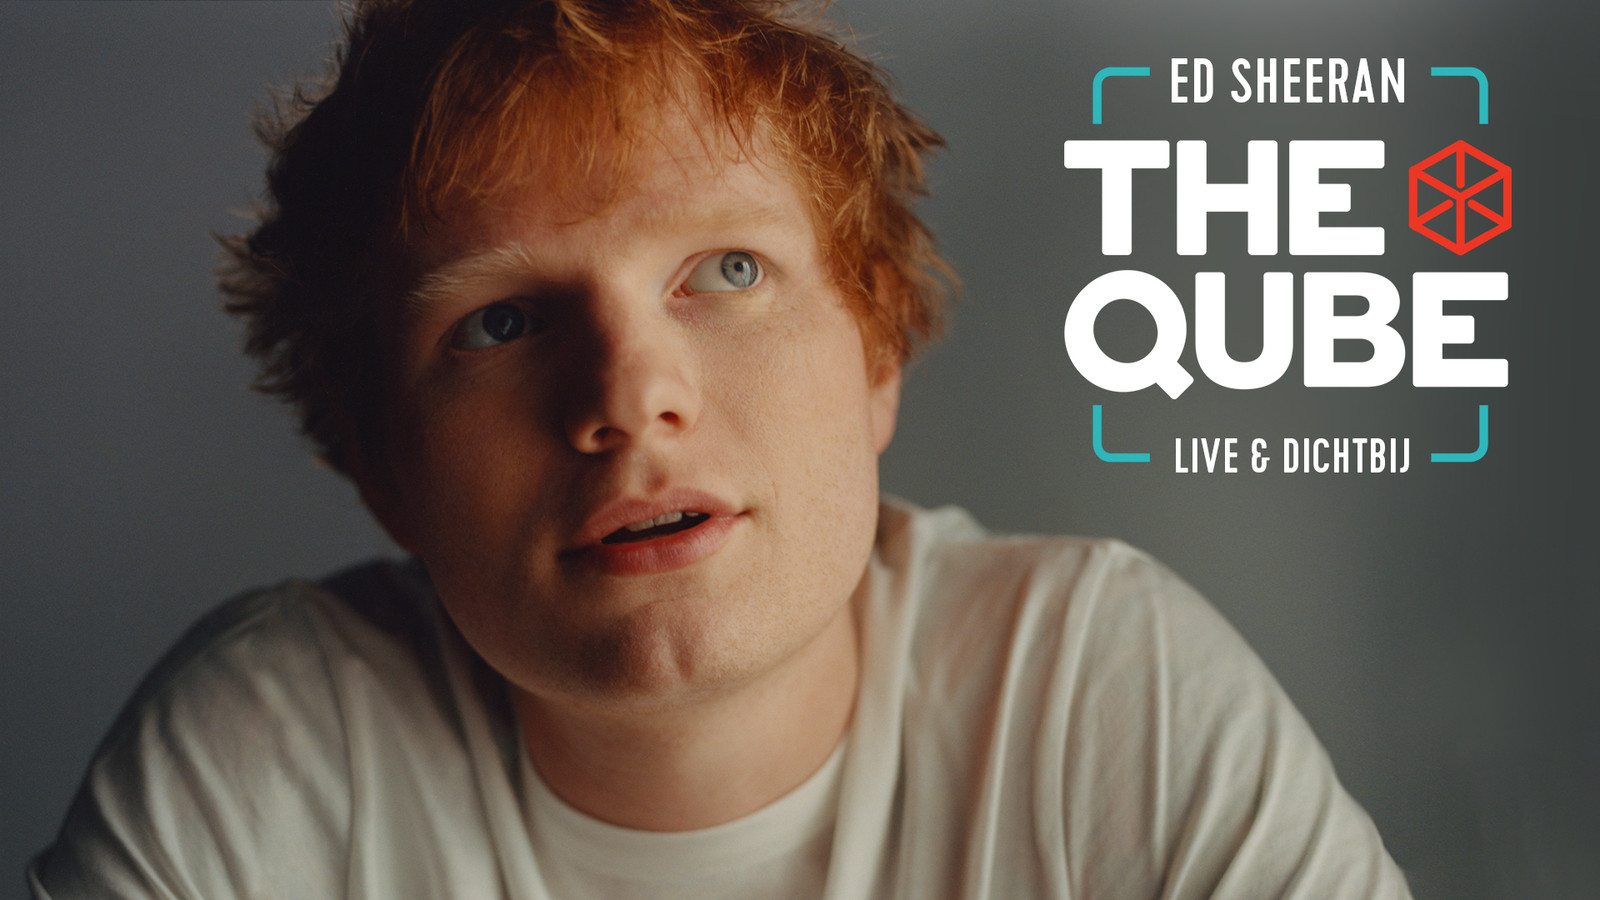 Ed Sheeran keert terug in The Qube.